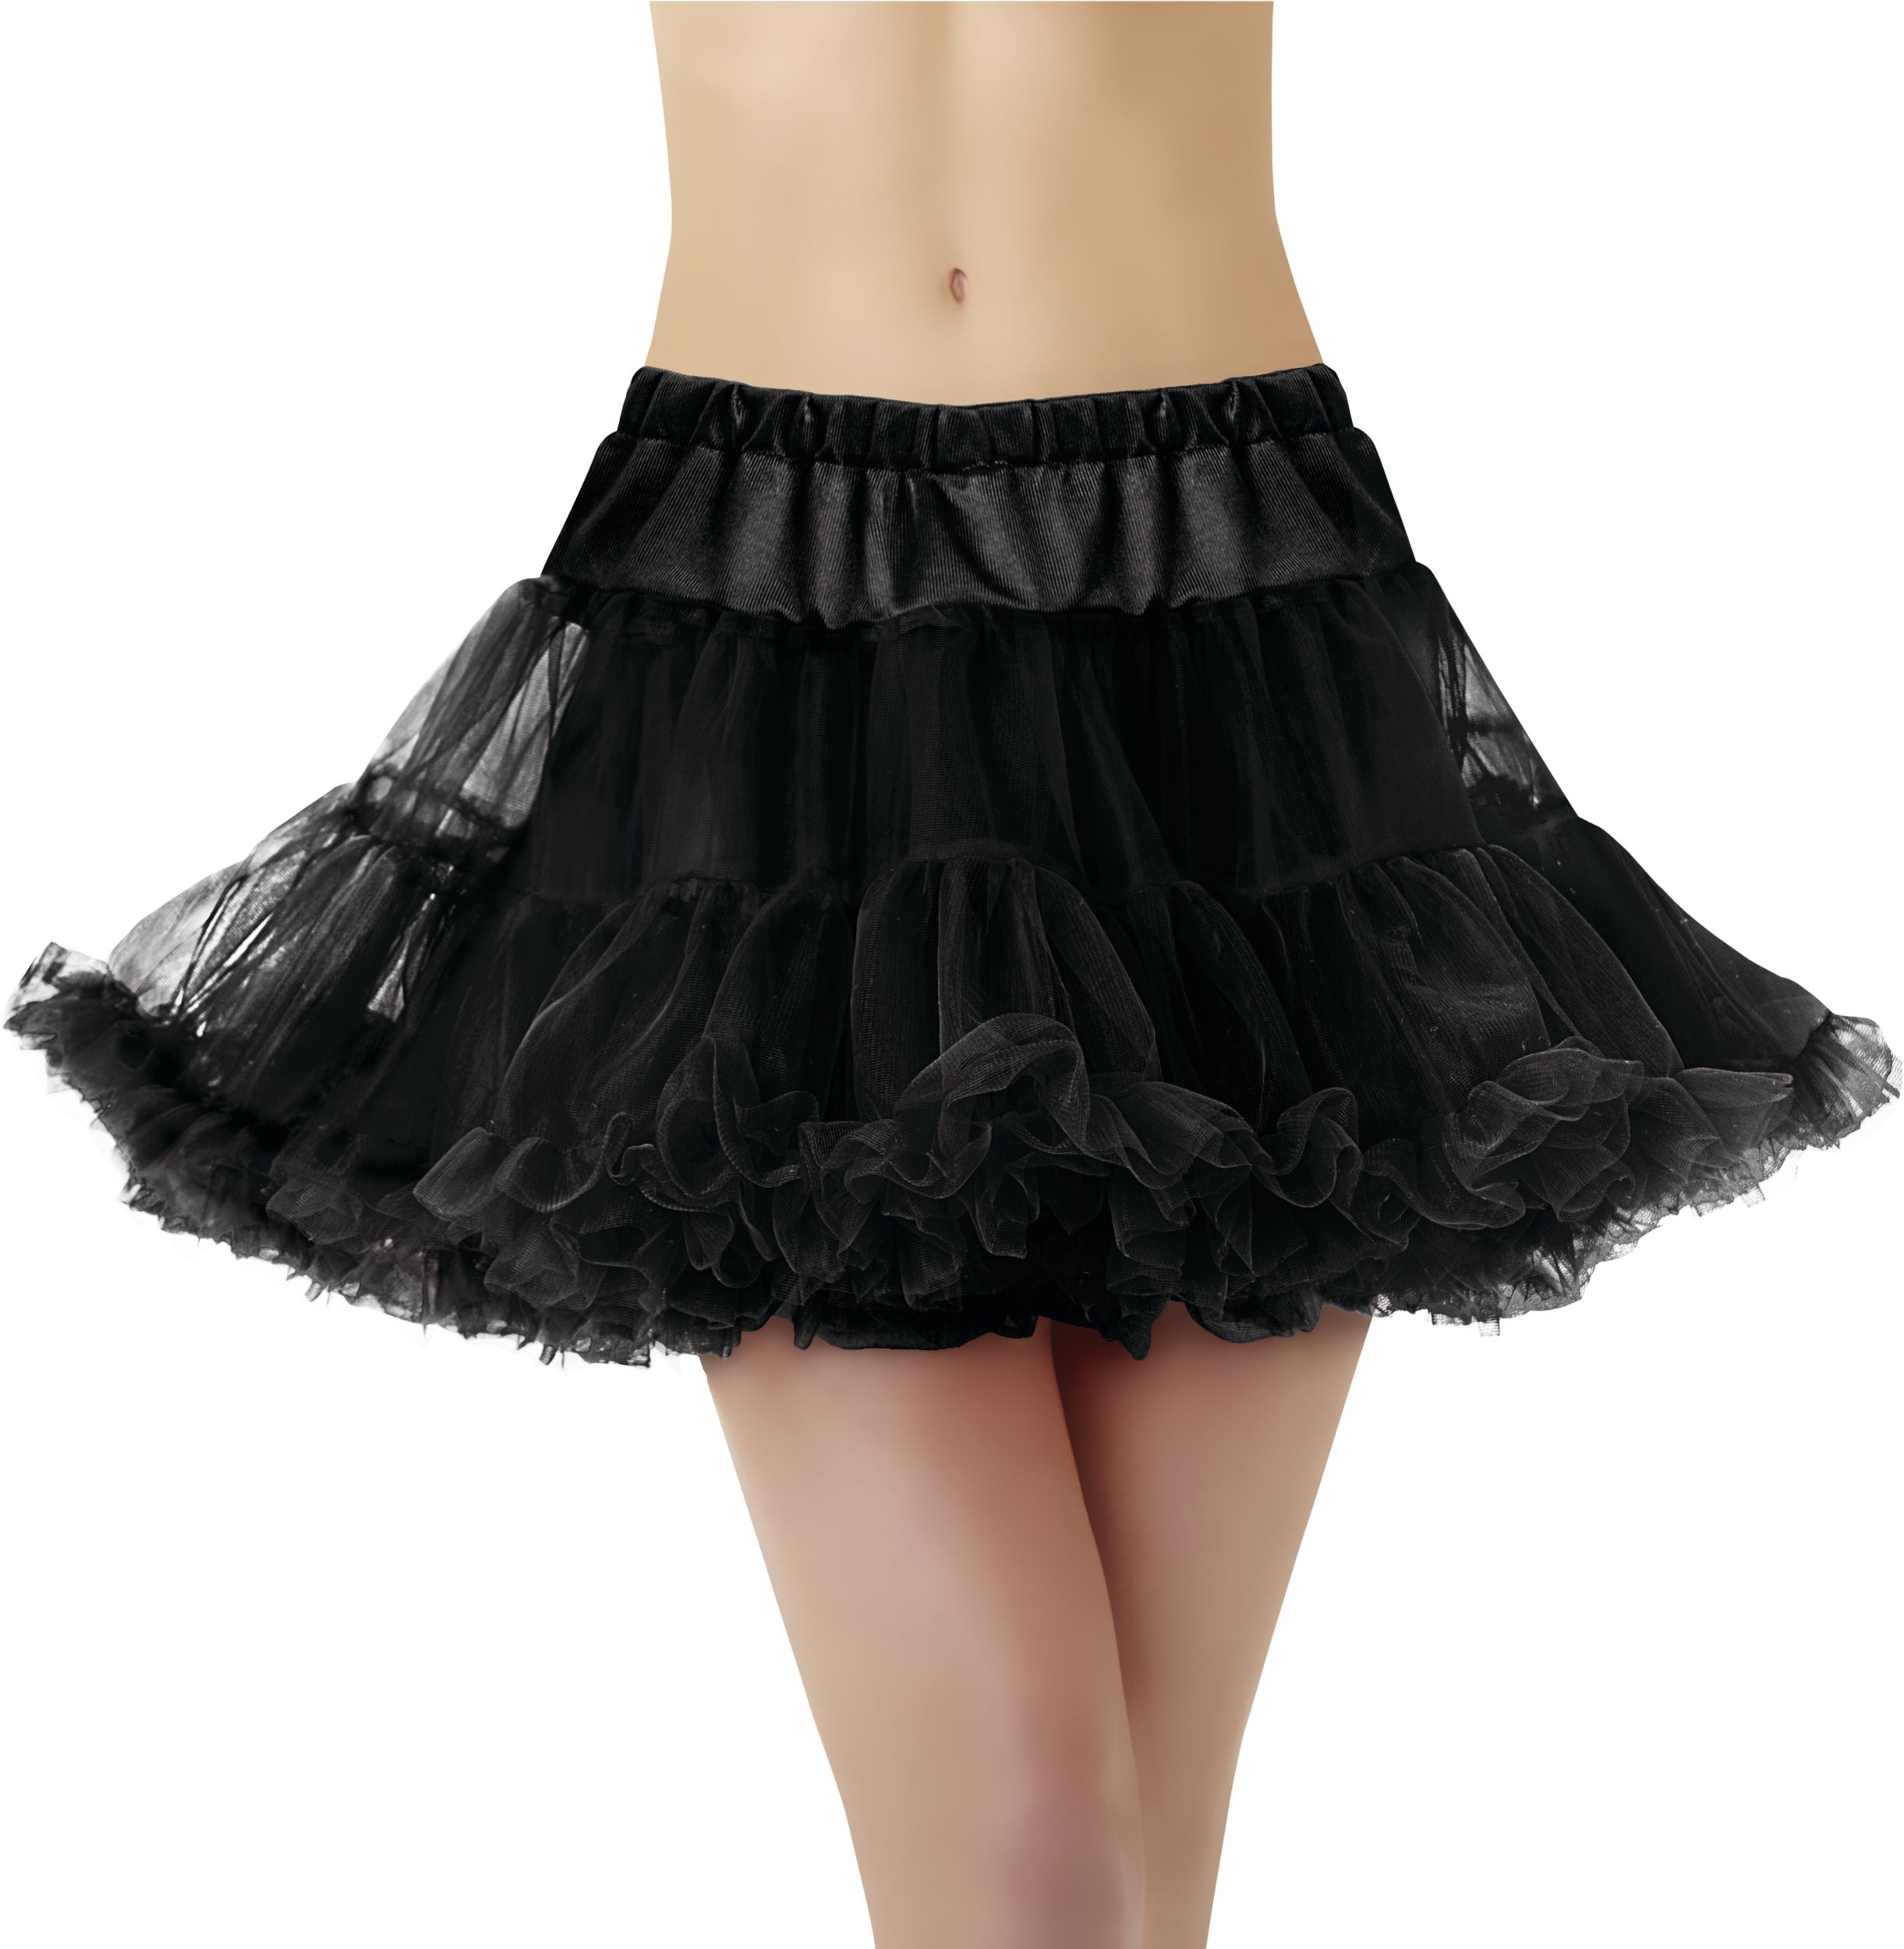 Adult Petticoat Tutu Tulle Skirt, Black, One Size, Wearable